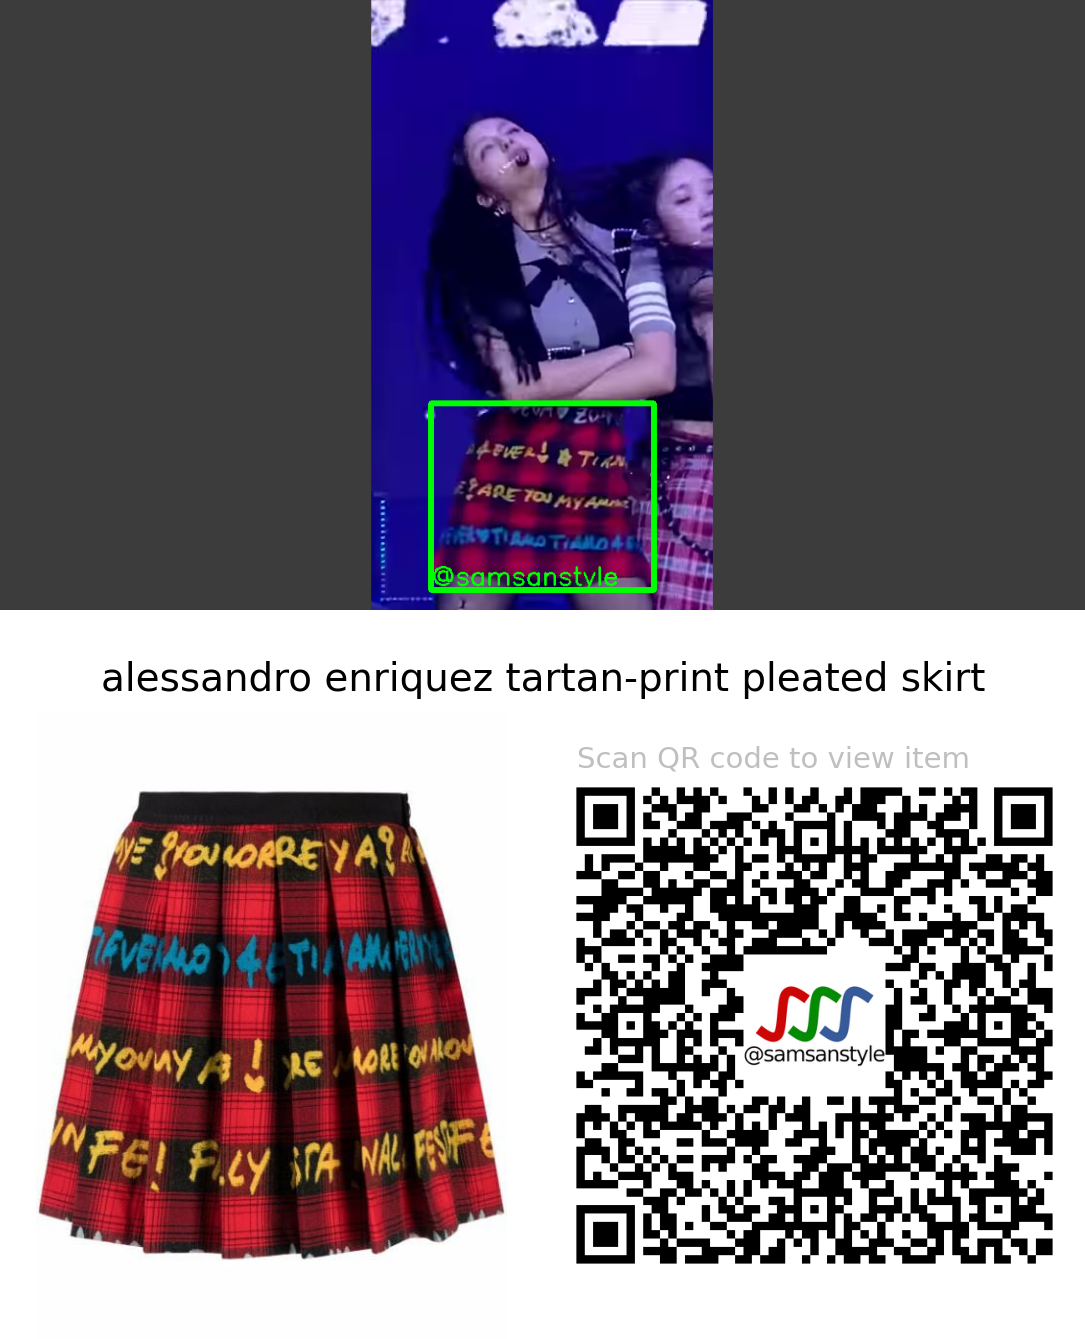 LAPILLUS Chanty | HIT YA! Mnet M Countdown | alessandro enriquez tartan-print pleated skirt